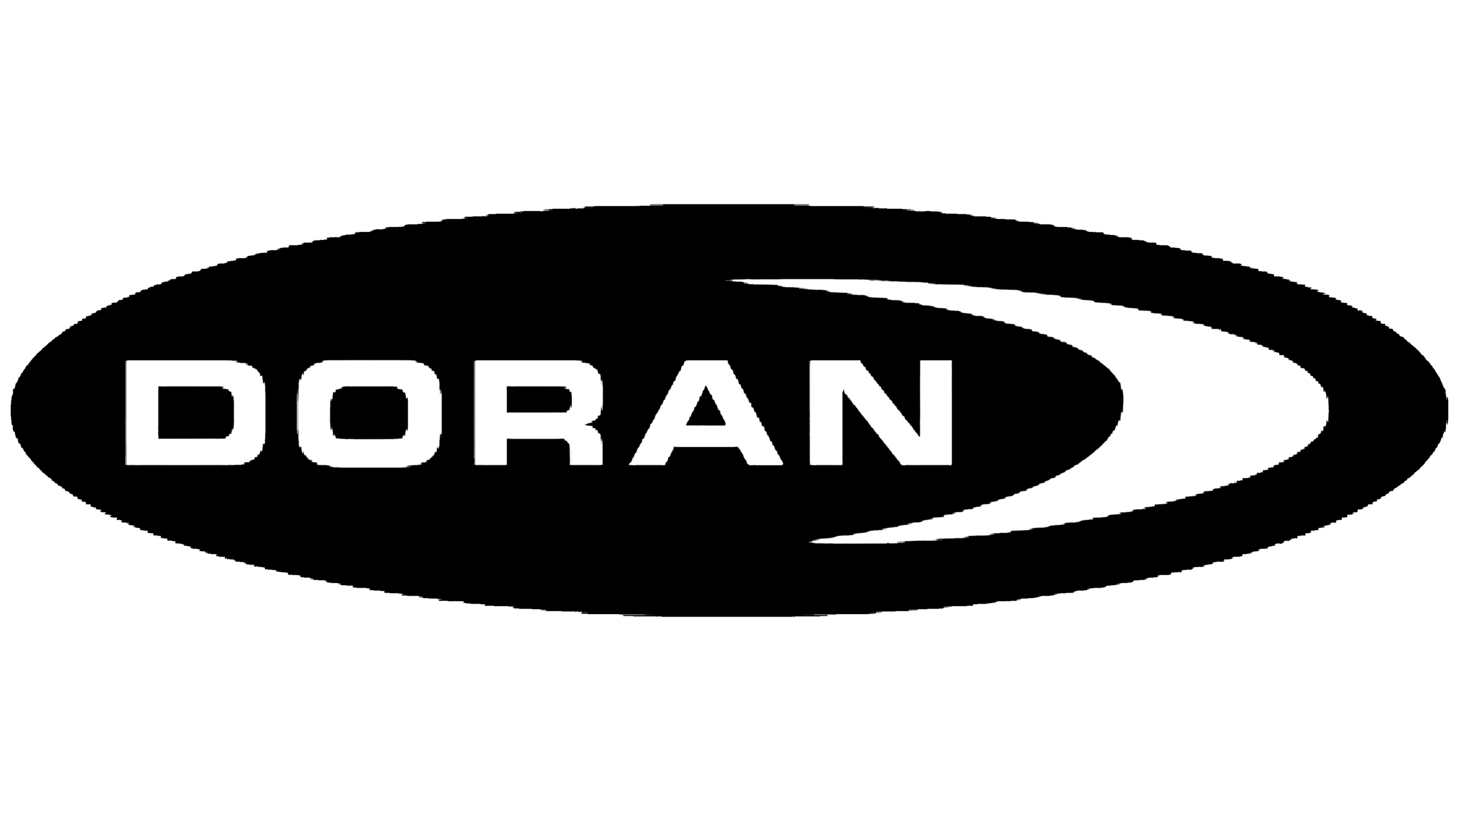 Doran enterprises sign